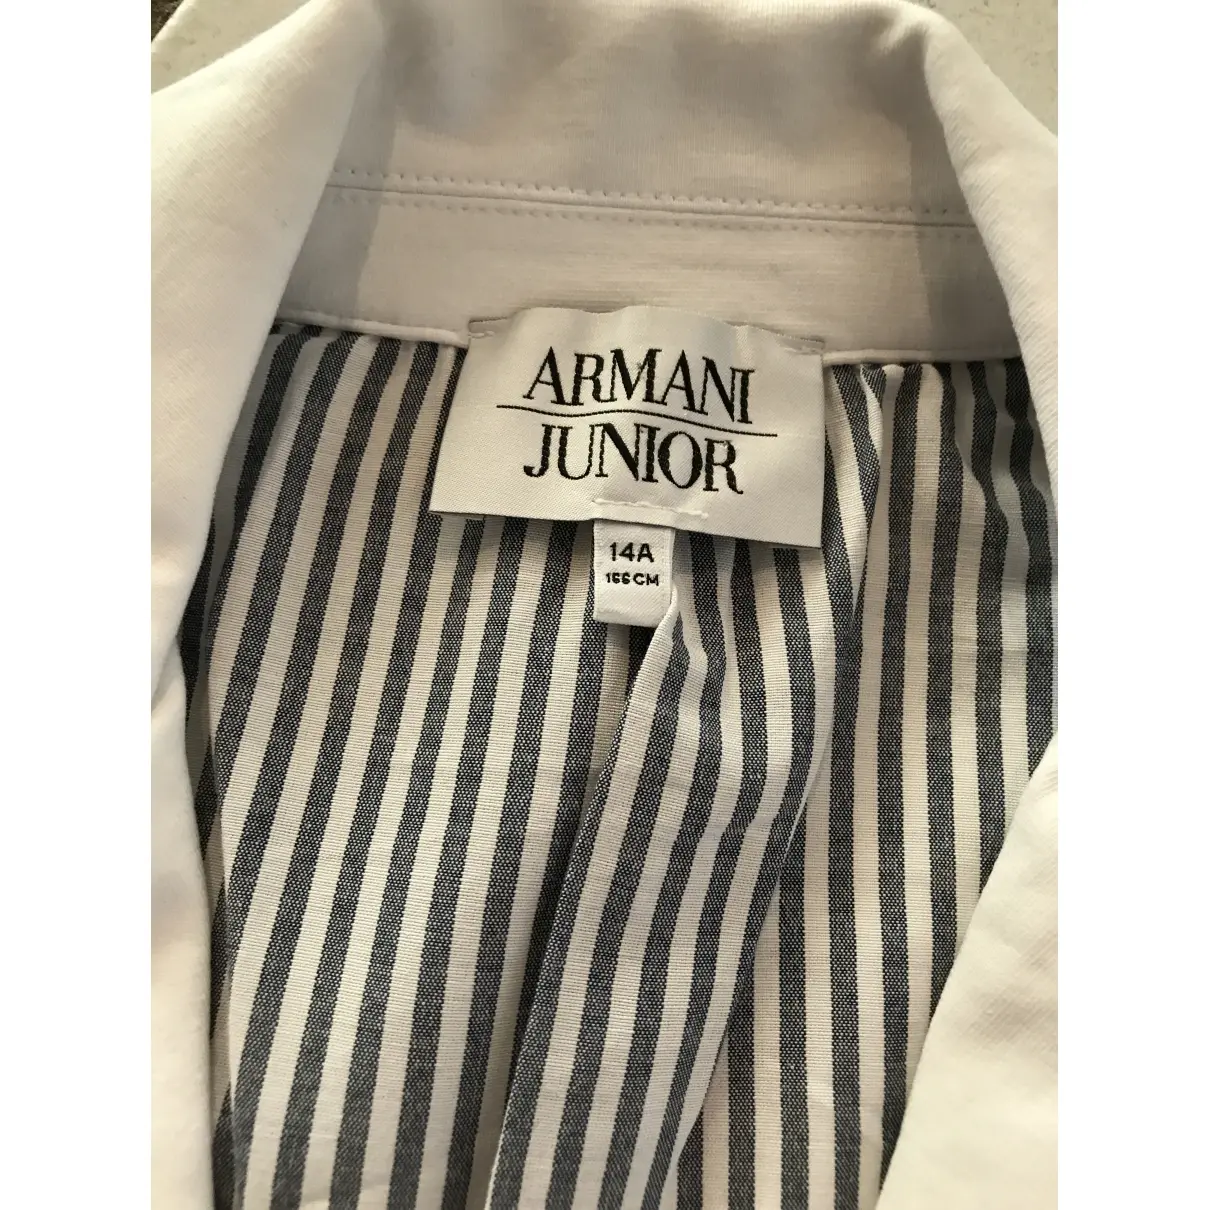 Buy ARMANI JUNIOR Vest online